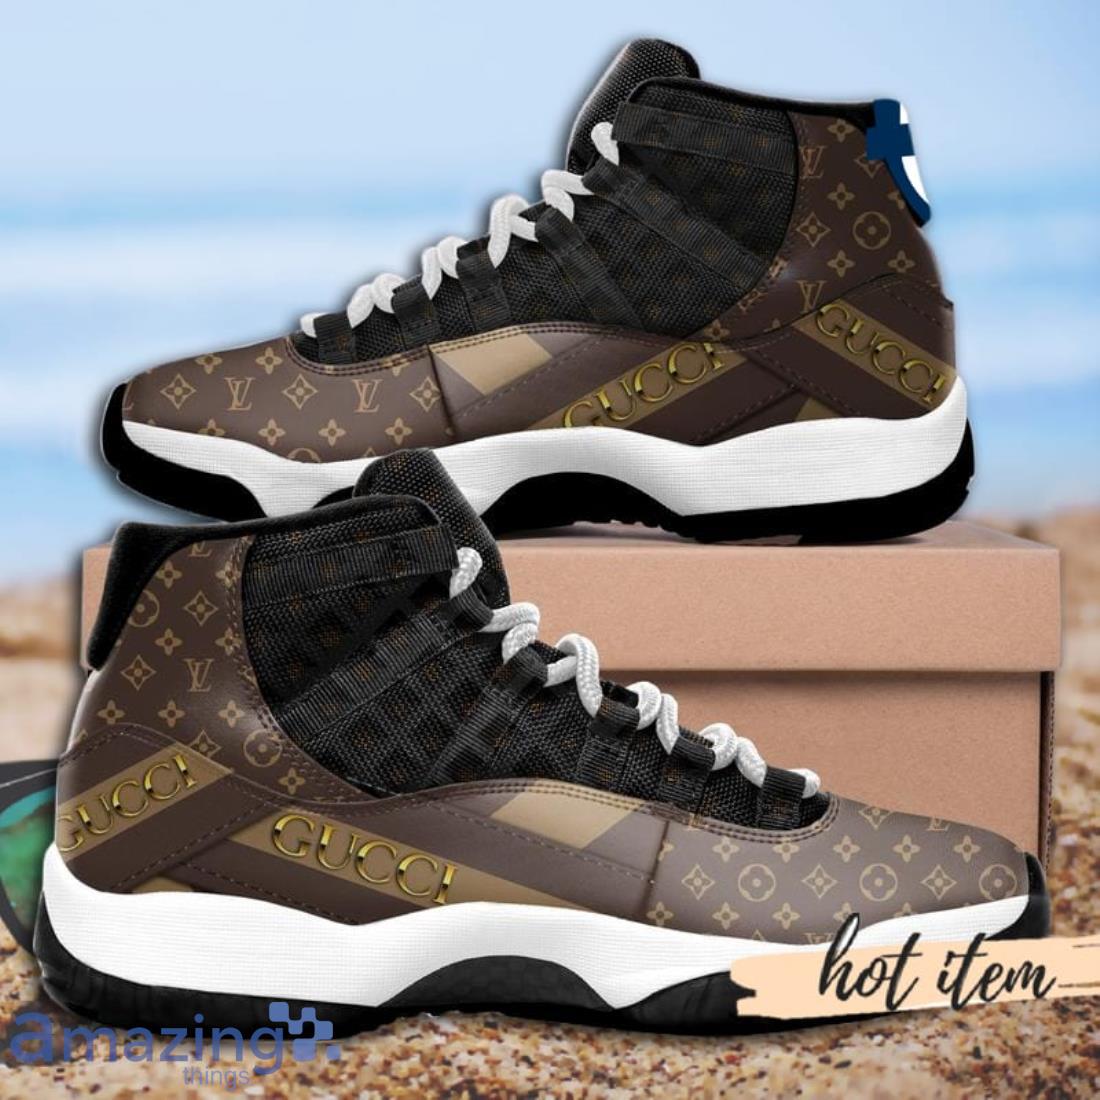 Gucci And Louis Vuitton Air Jordan 11 Shoes Fashsion Shoes